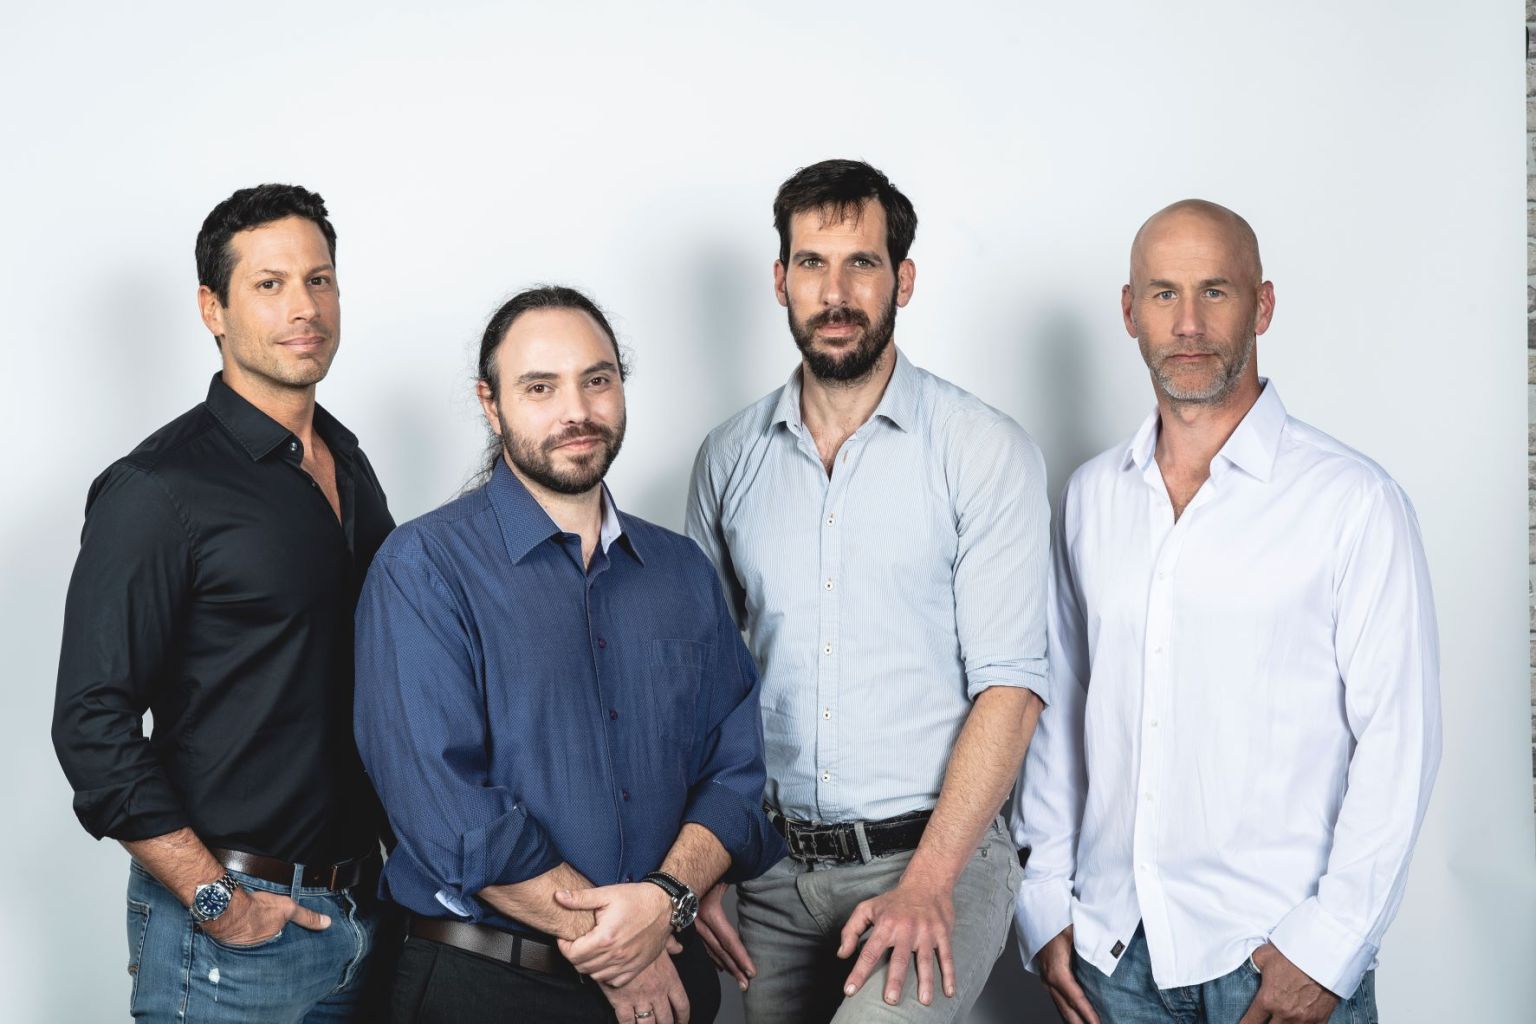 Spectralics founders Ran Bar Yosef, Eran Falk, Yuval Kashtar and Yuval Keinan.